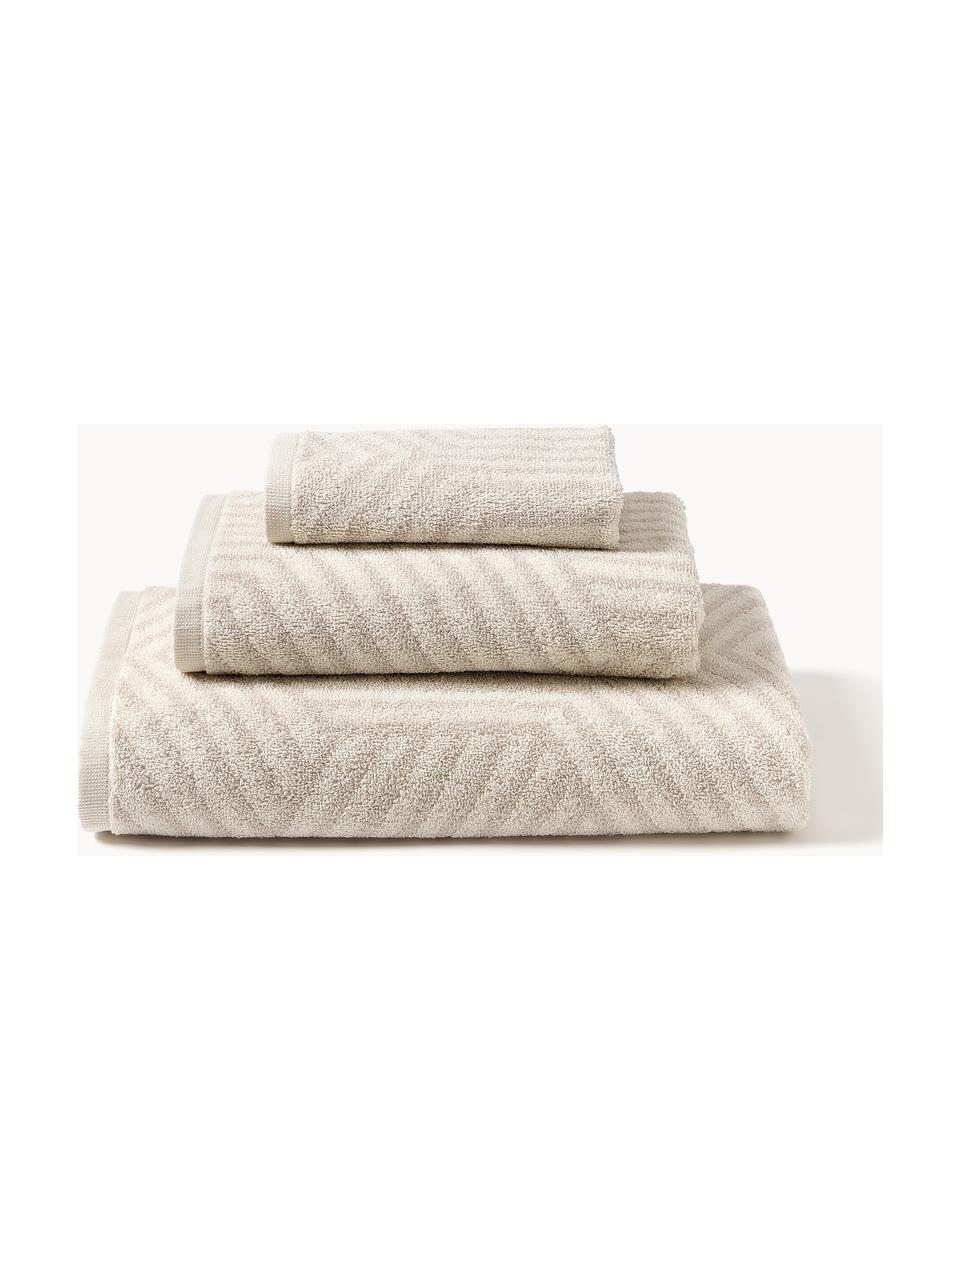 Set de toallas Fatu, tamaños diferentes, Tonos beige claros, Set de 3 (toalla tocador, toalla lavabo y toalla de ducha)